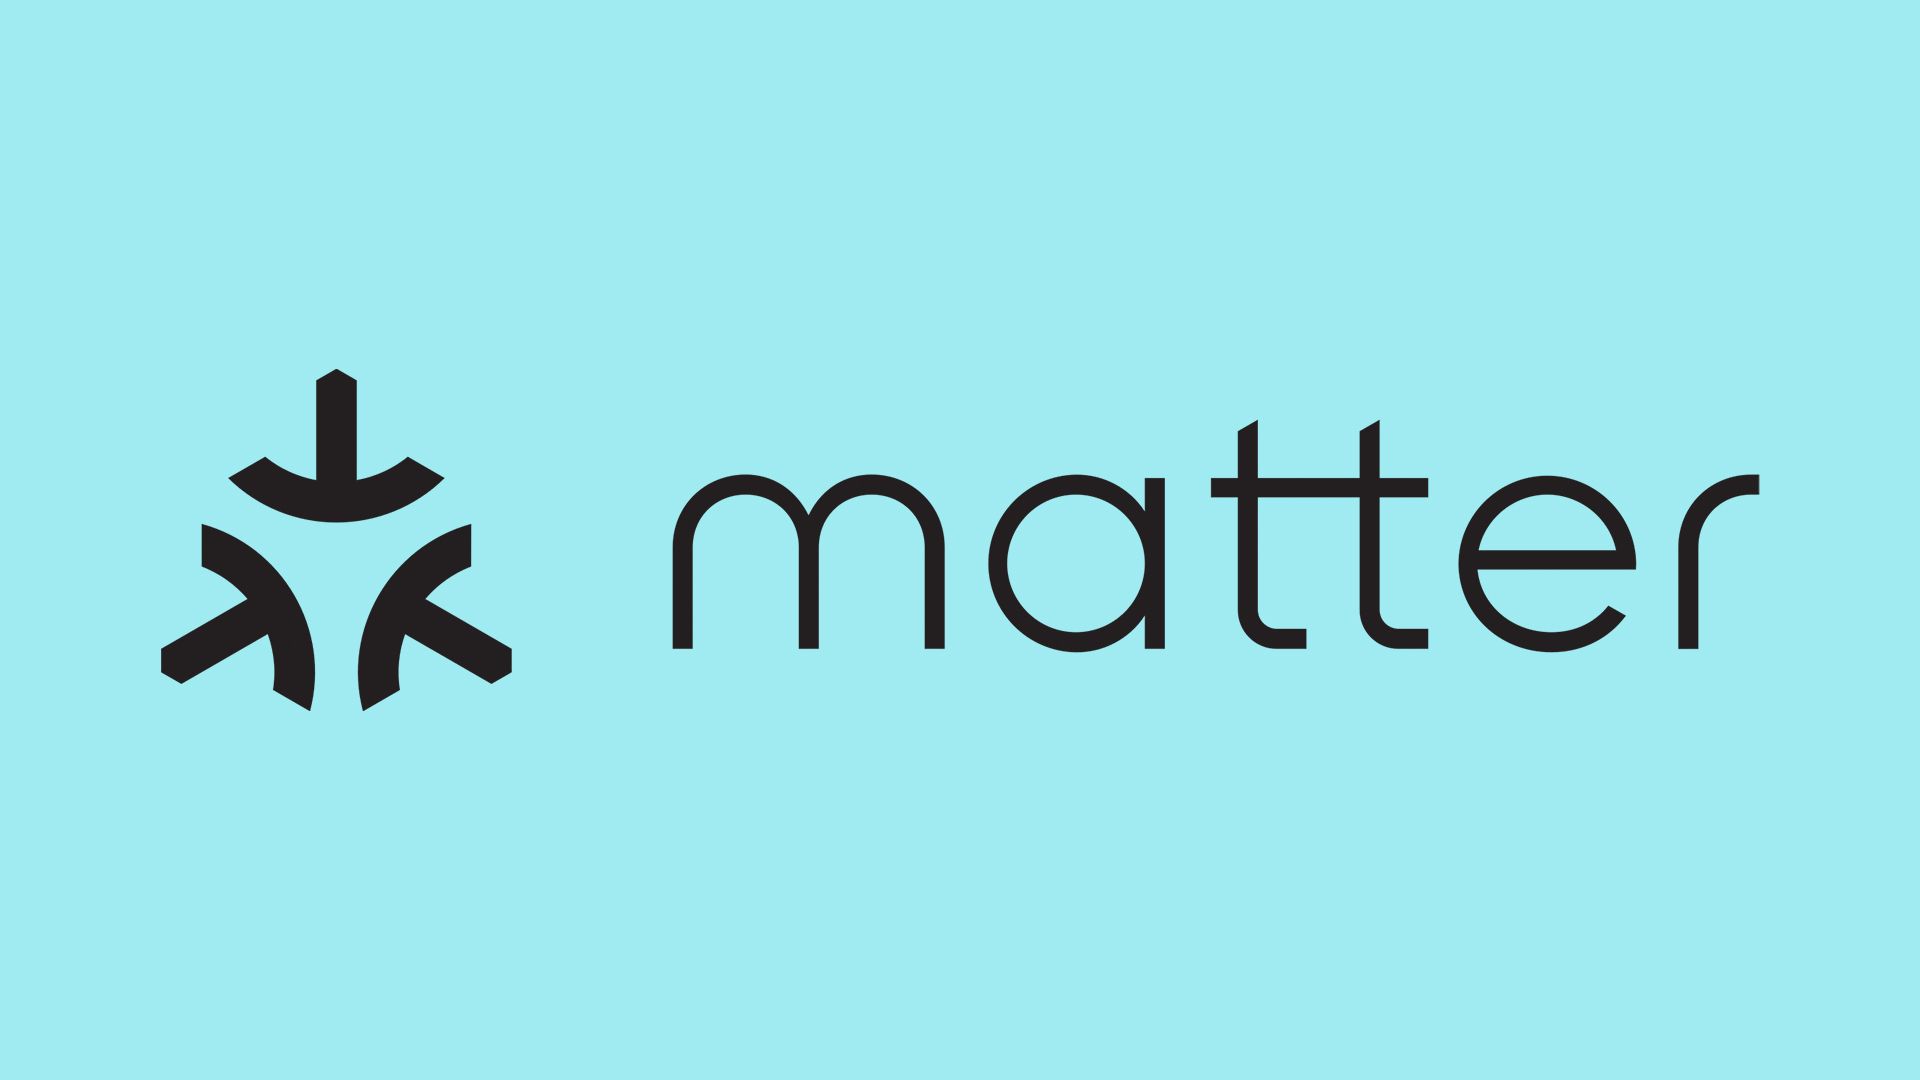 Matter logo for interoperable smart devices